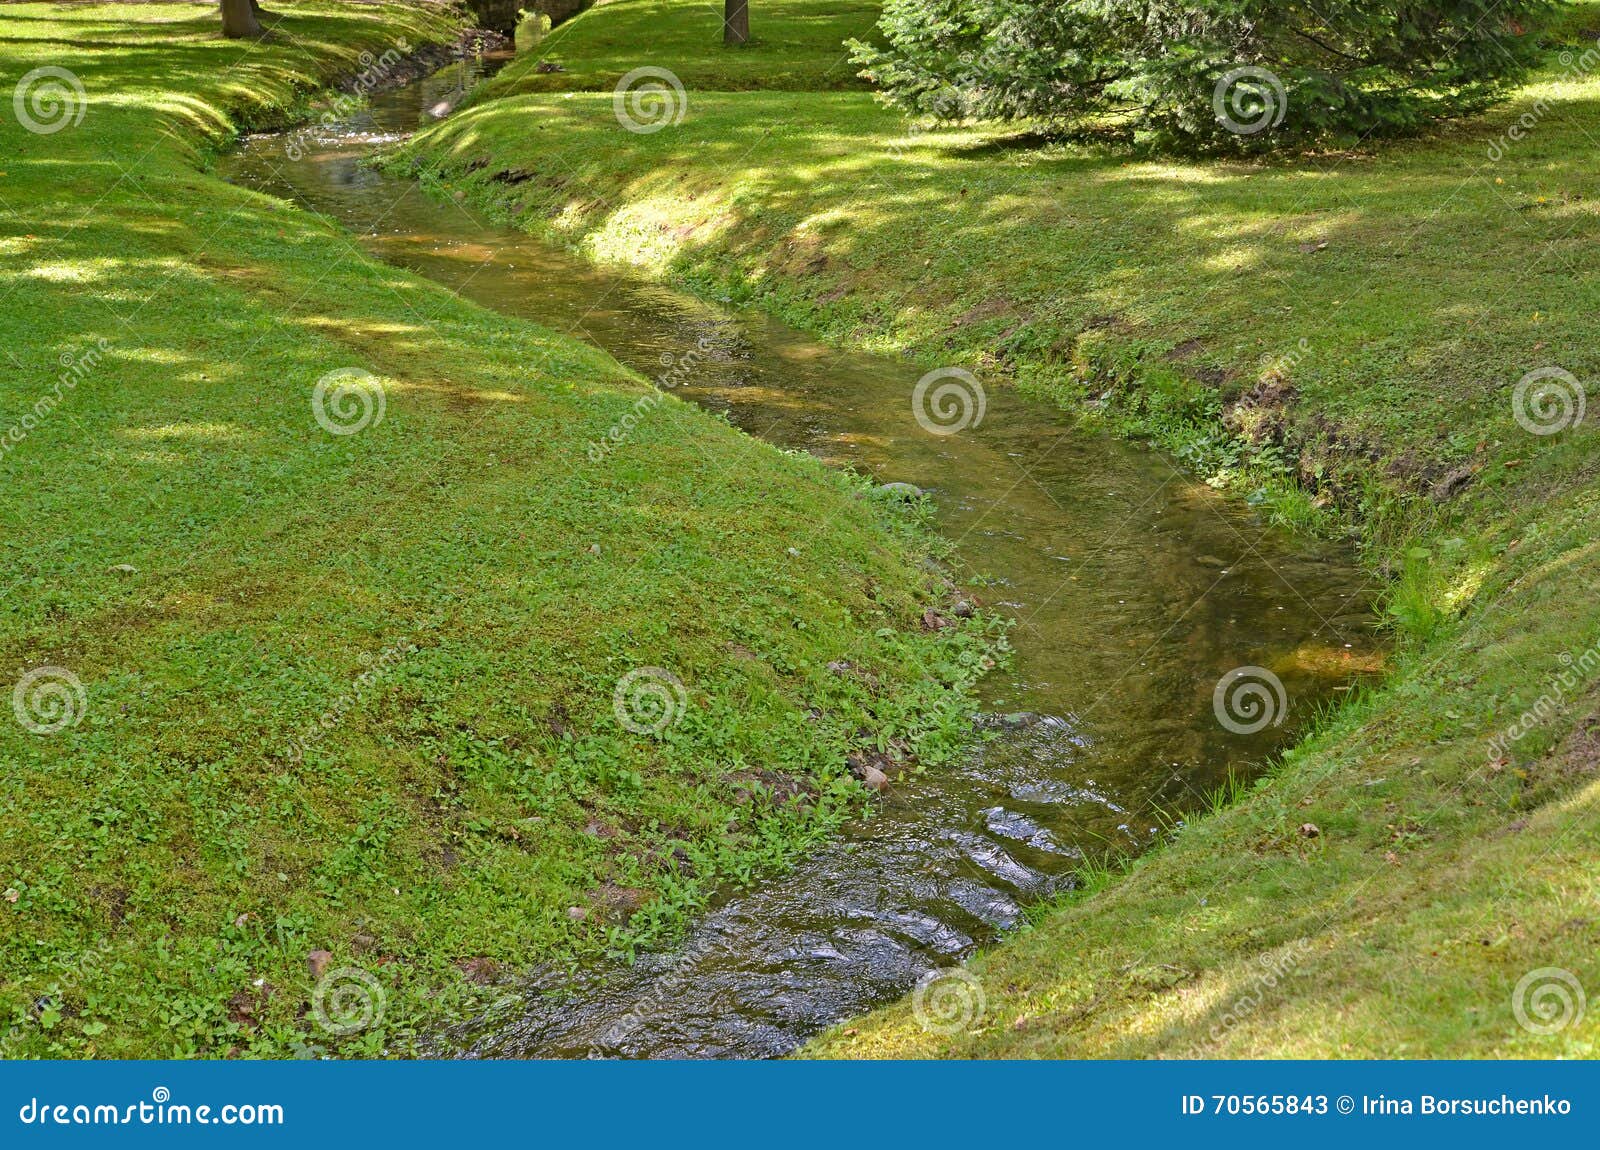 the stream proceeds through park. summer landscape